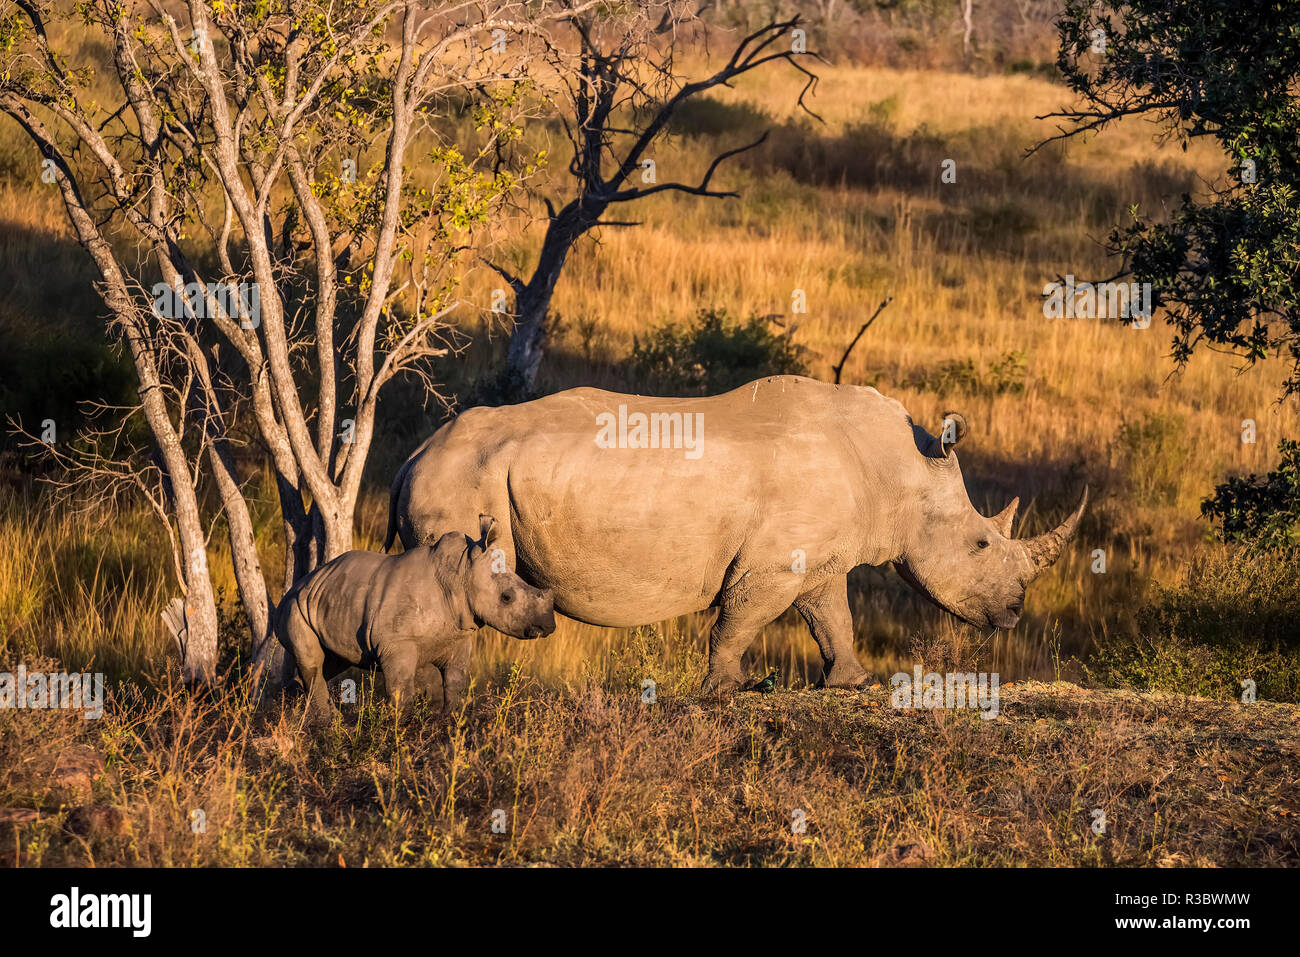 Africa, South Africa, Welgevonden Game Reserve. Adult and baby white rhinos. Credit as: Jones & Shimlock / Jaynes Gallery / DanitaDelimont.com Stock Photo